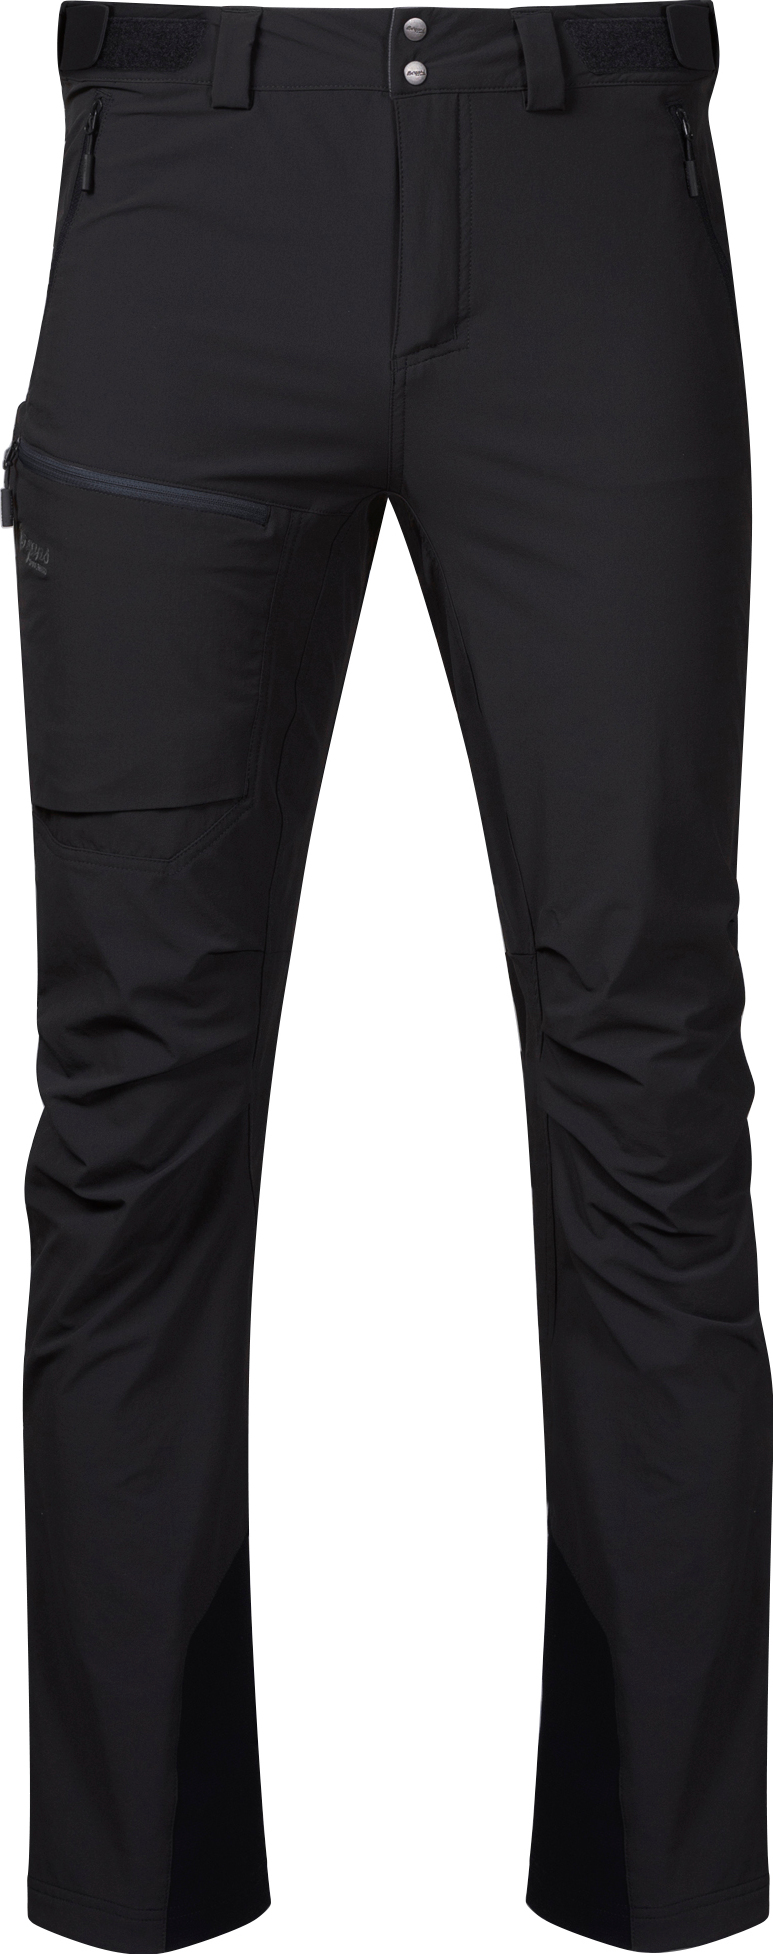 Men’s Breheimen Softshell Pants Black/Solid Charcoal